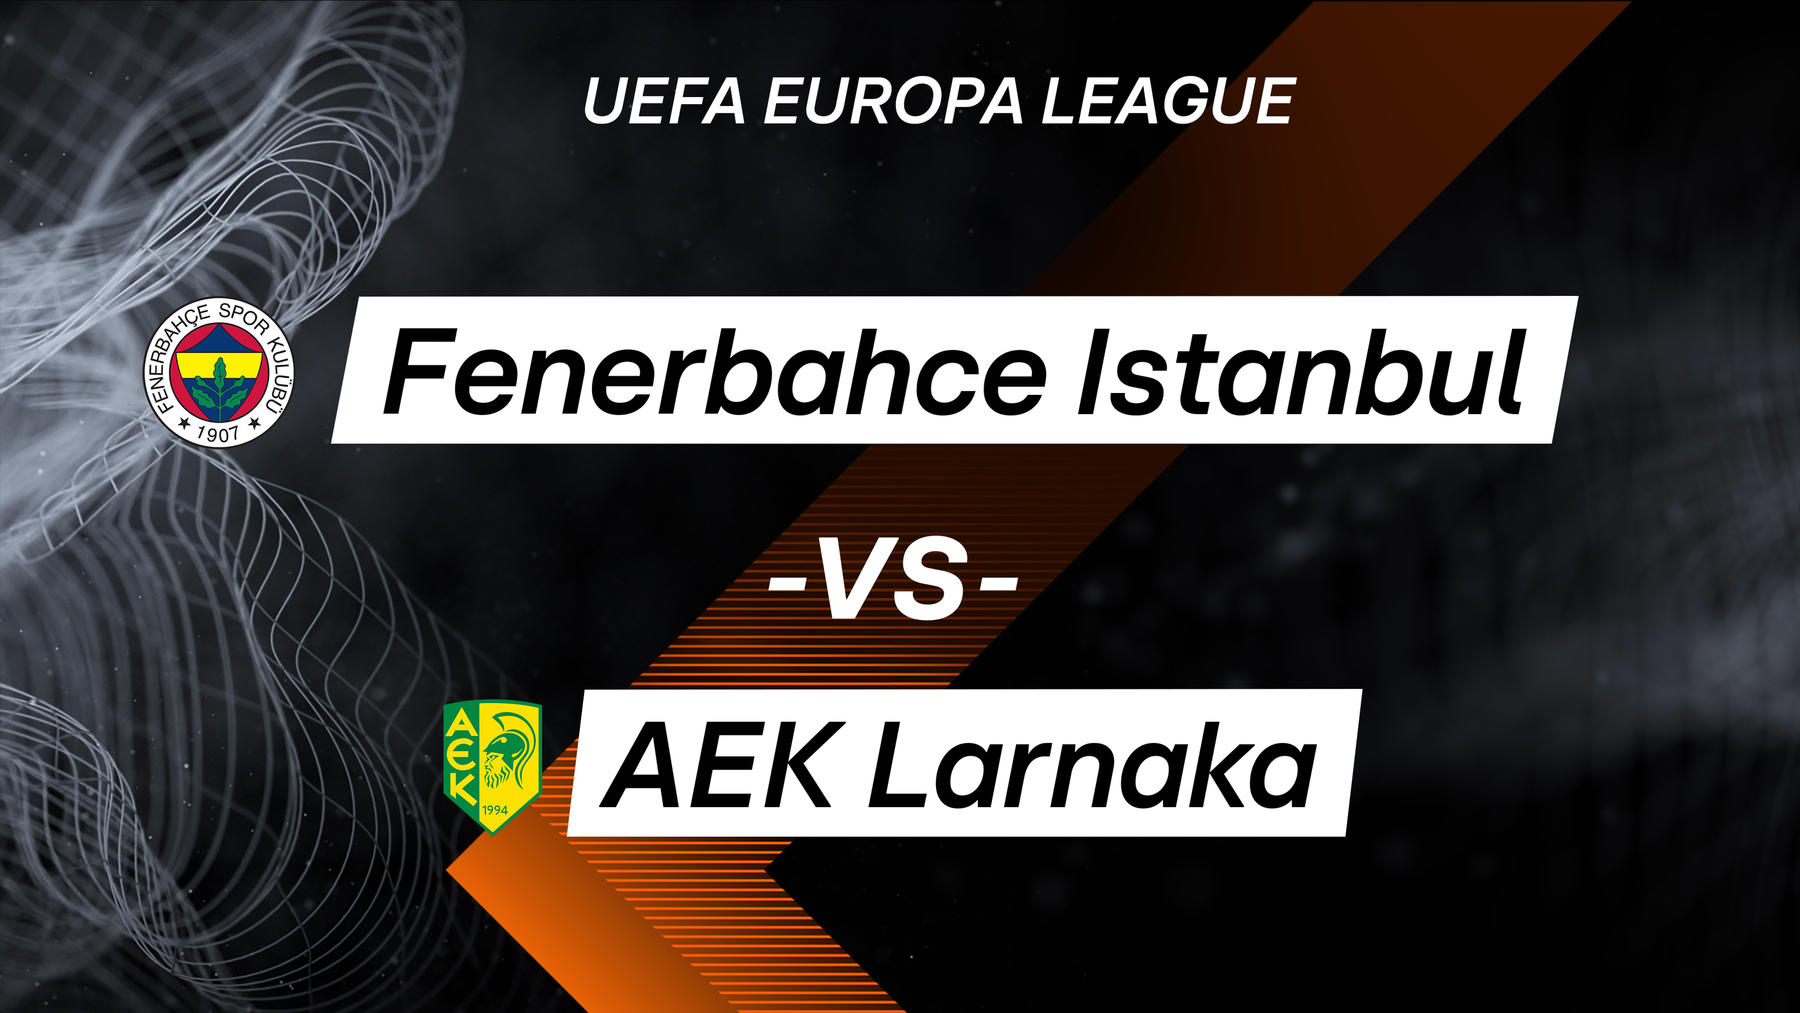 Fenerbahce Istanbul vs. AEK Larnaka